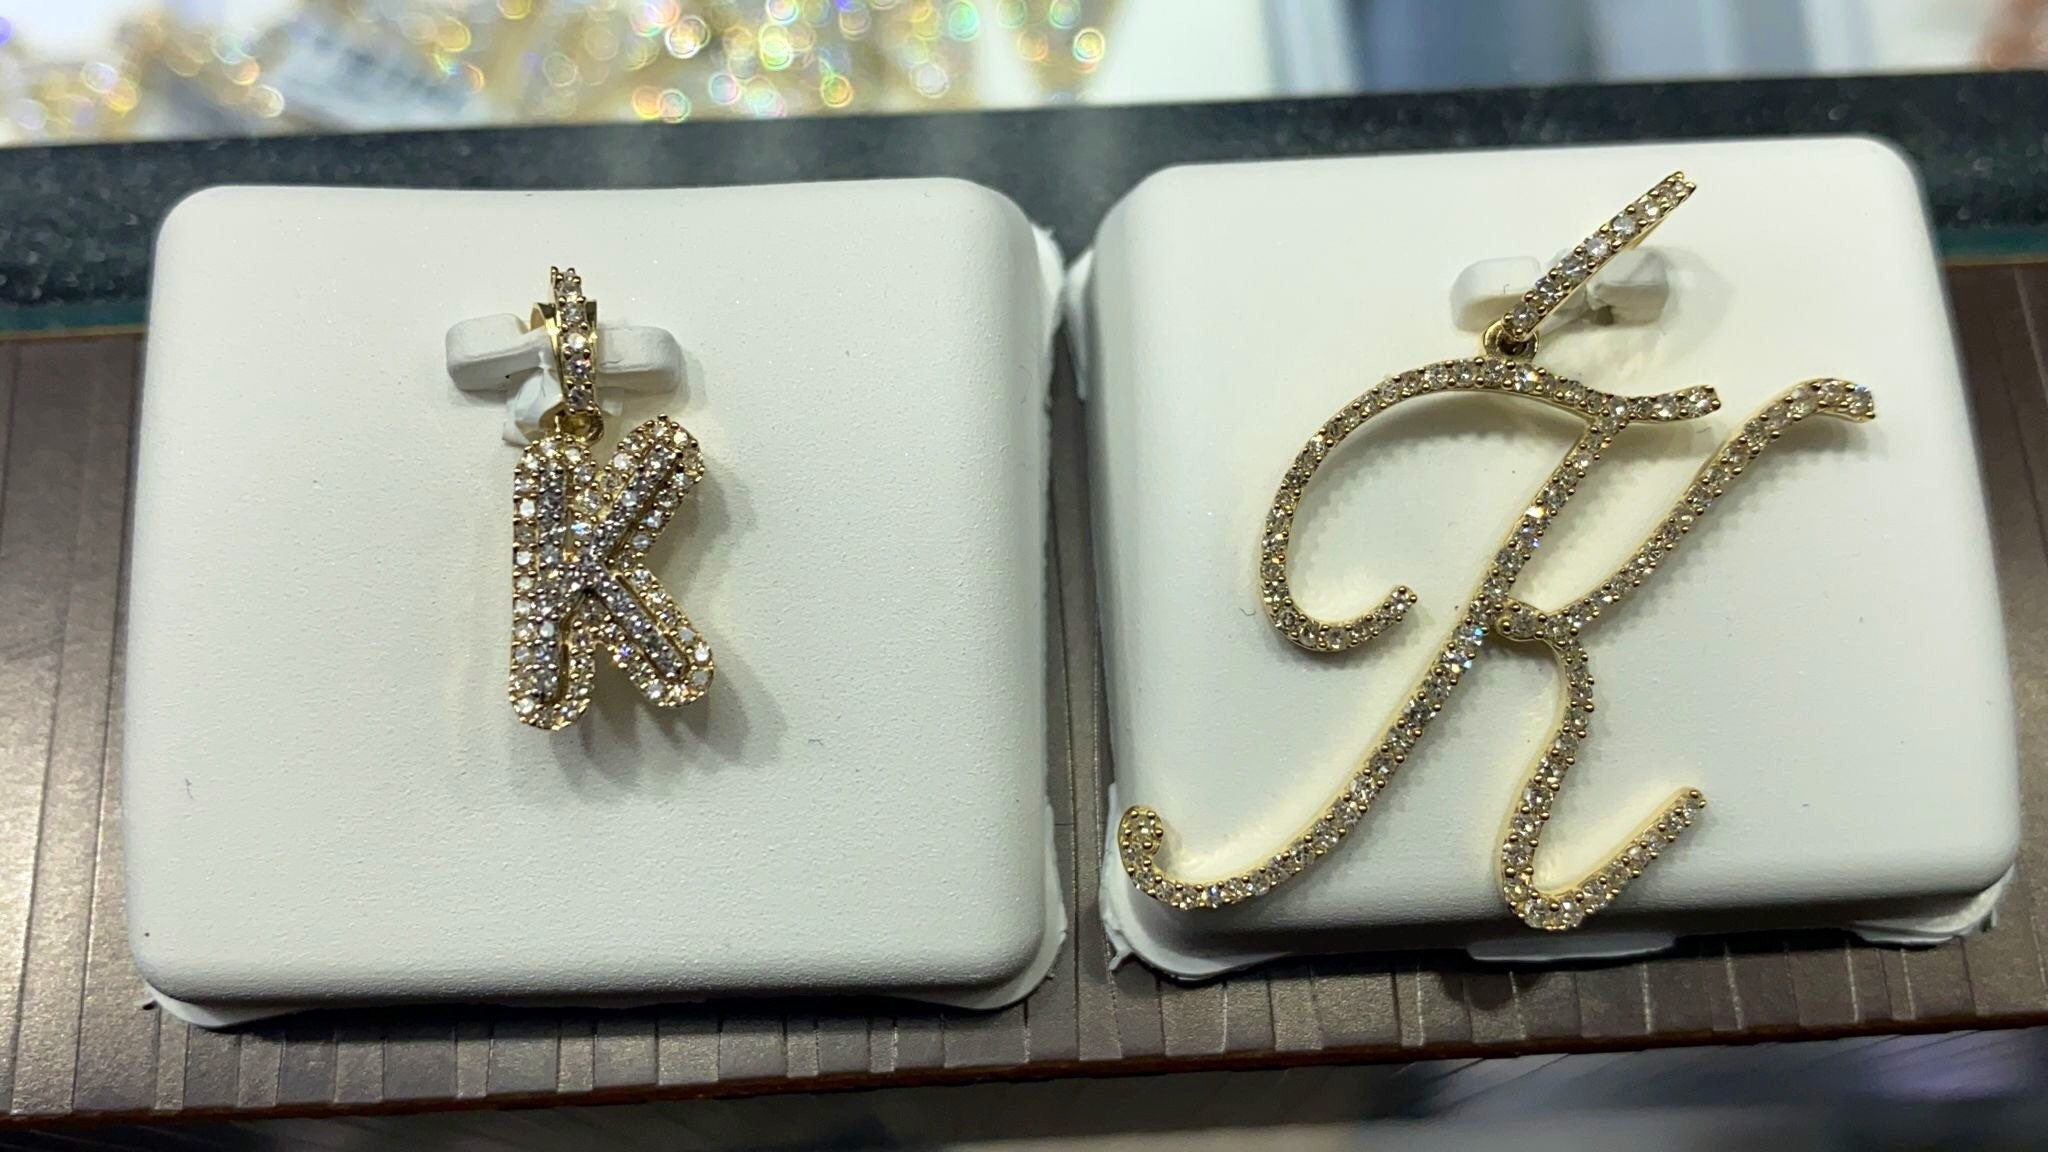 10k Solid Gold | Monogram Pendant Necklace | Diamond Letter Pendant | Initial Necklace | Name Pendant | Letter Charm Pendant | Christmas